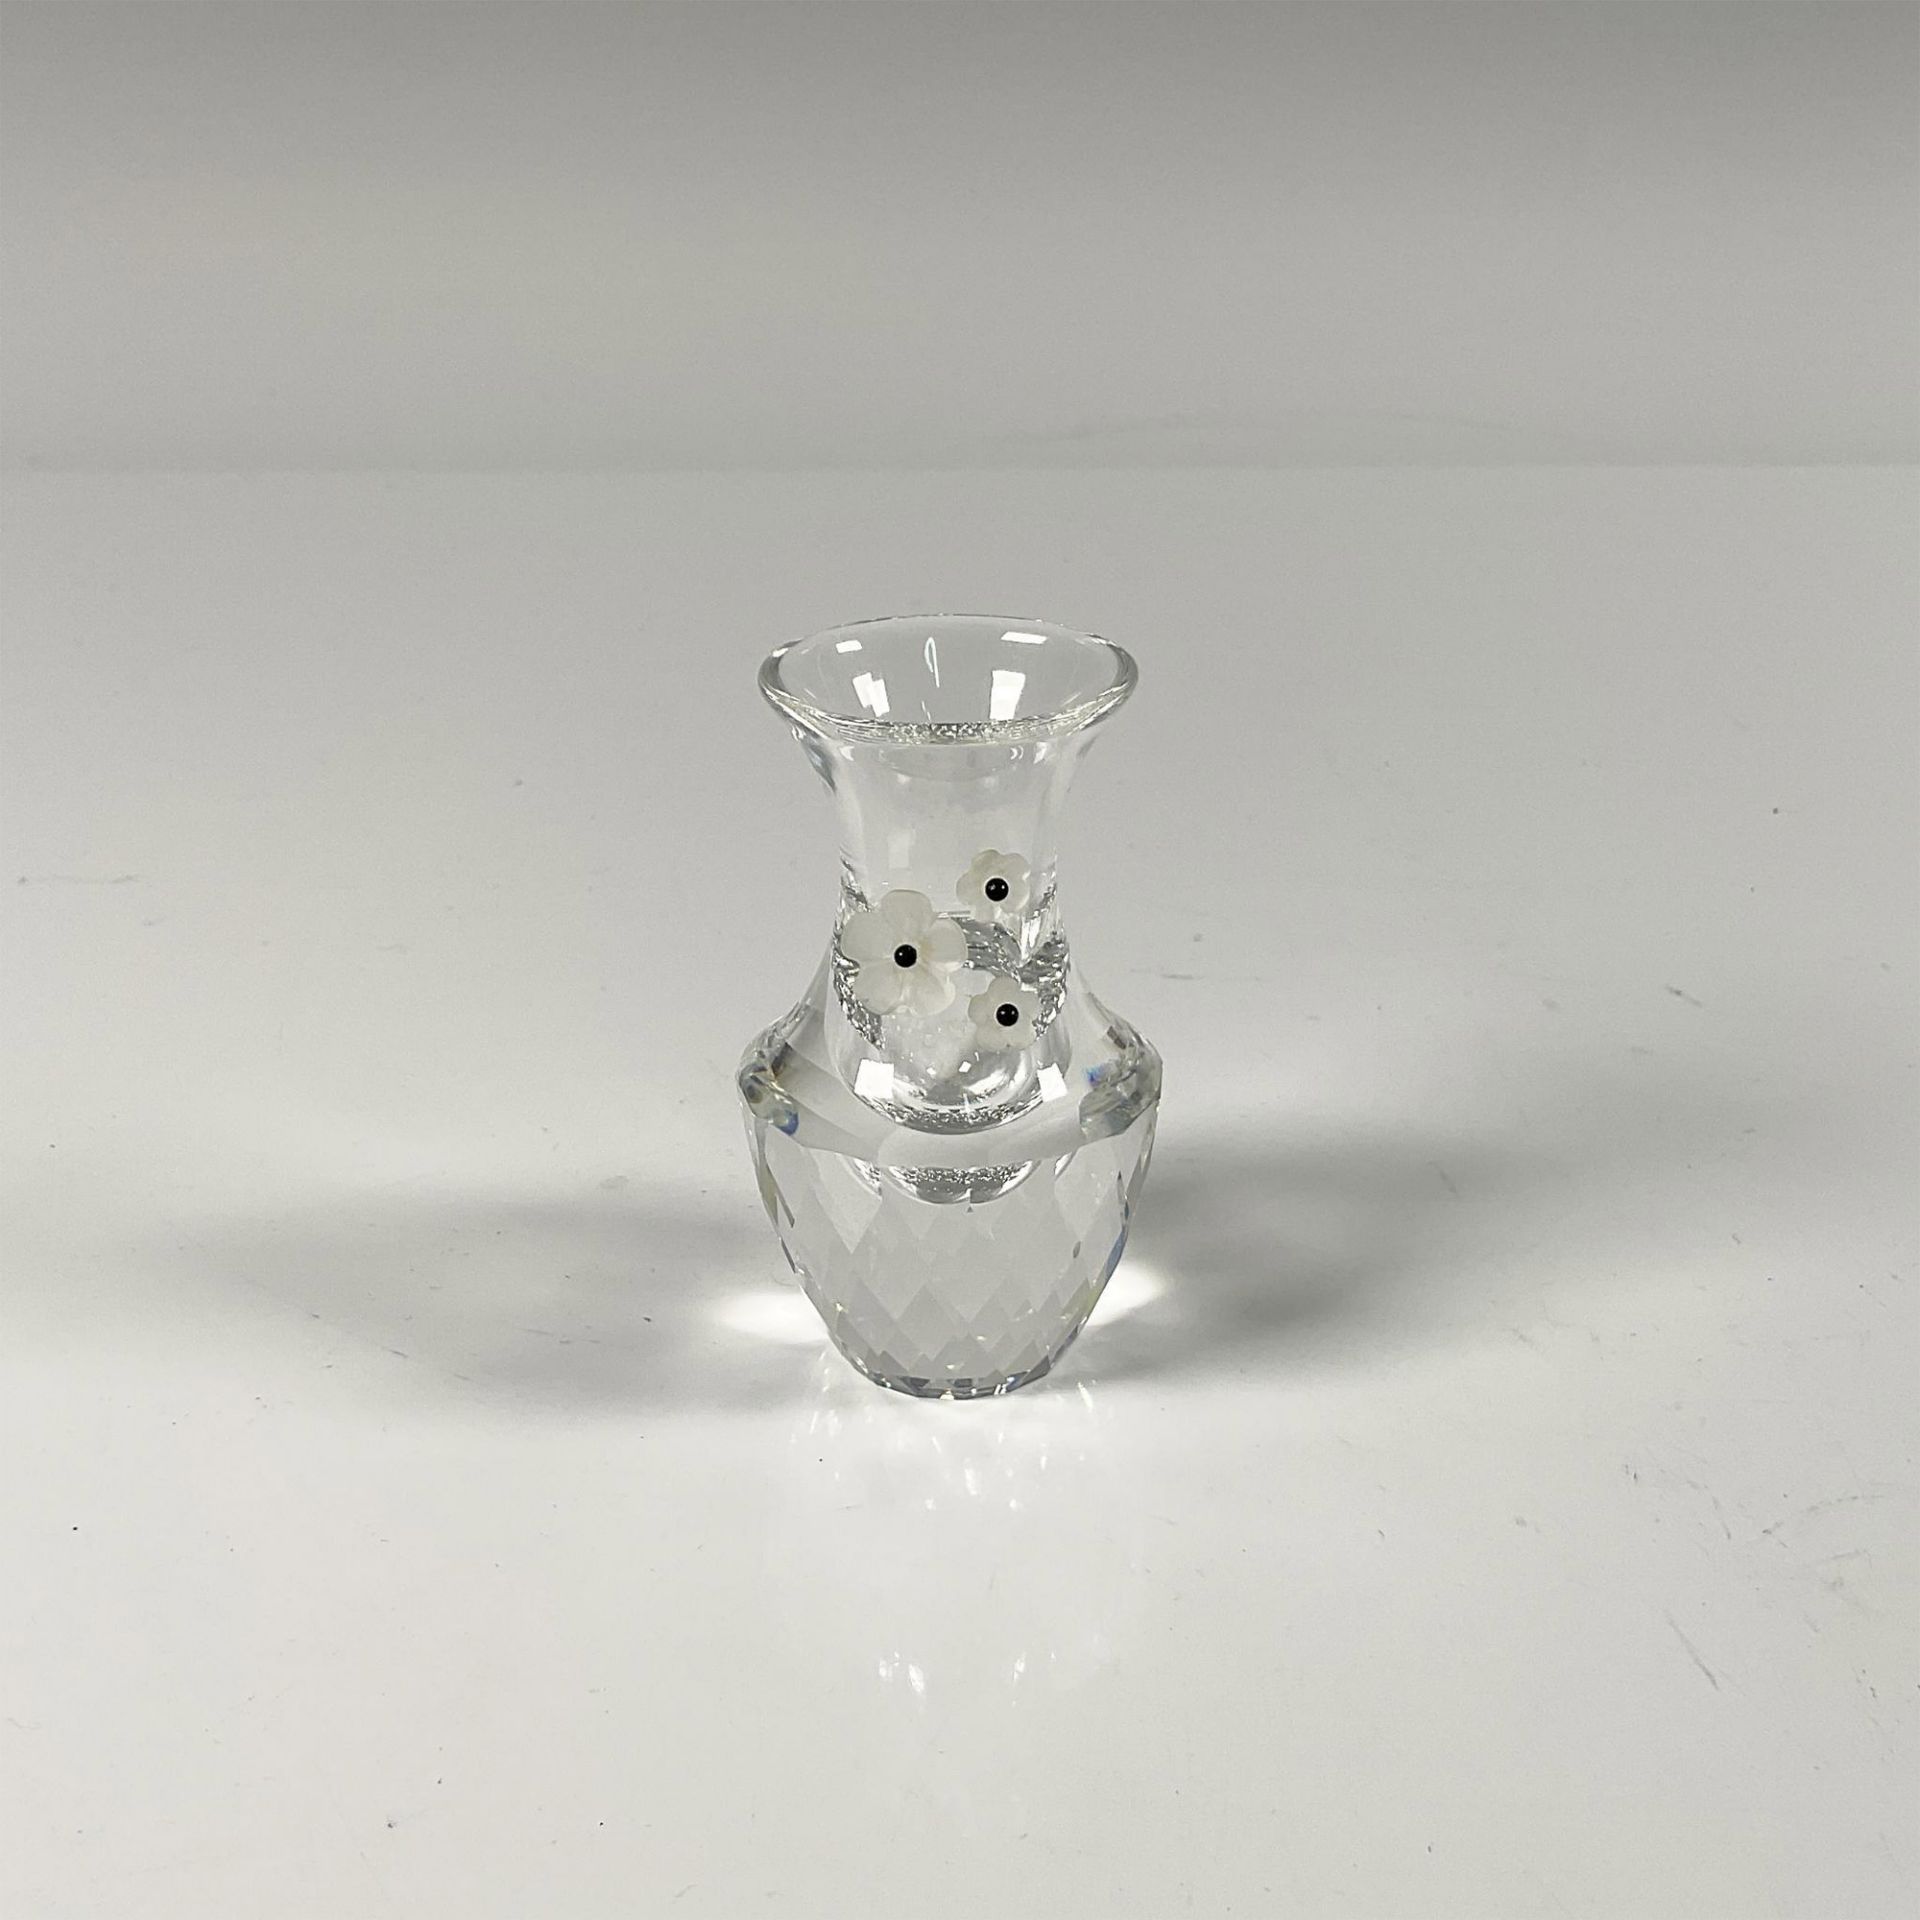 Swarovski Crystal Figurine, Flower Vase